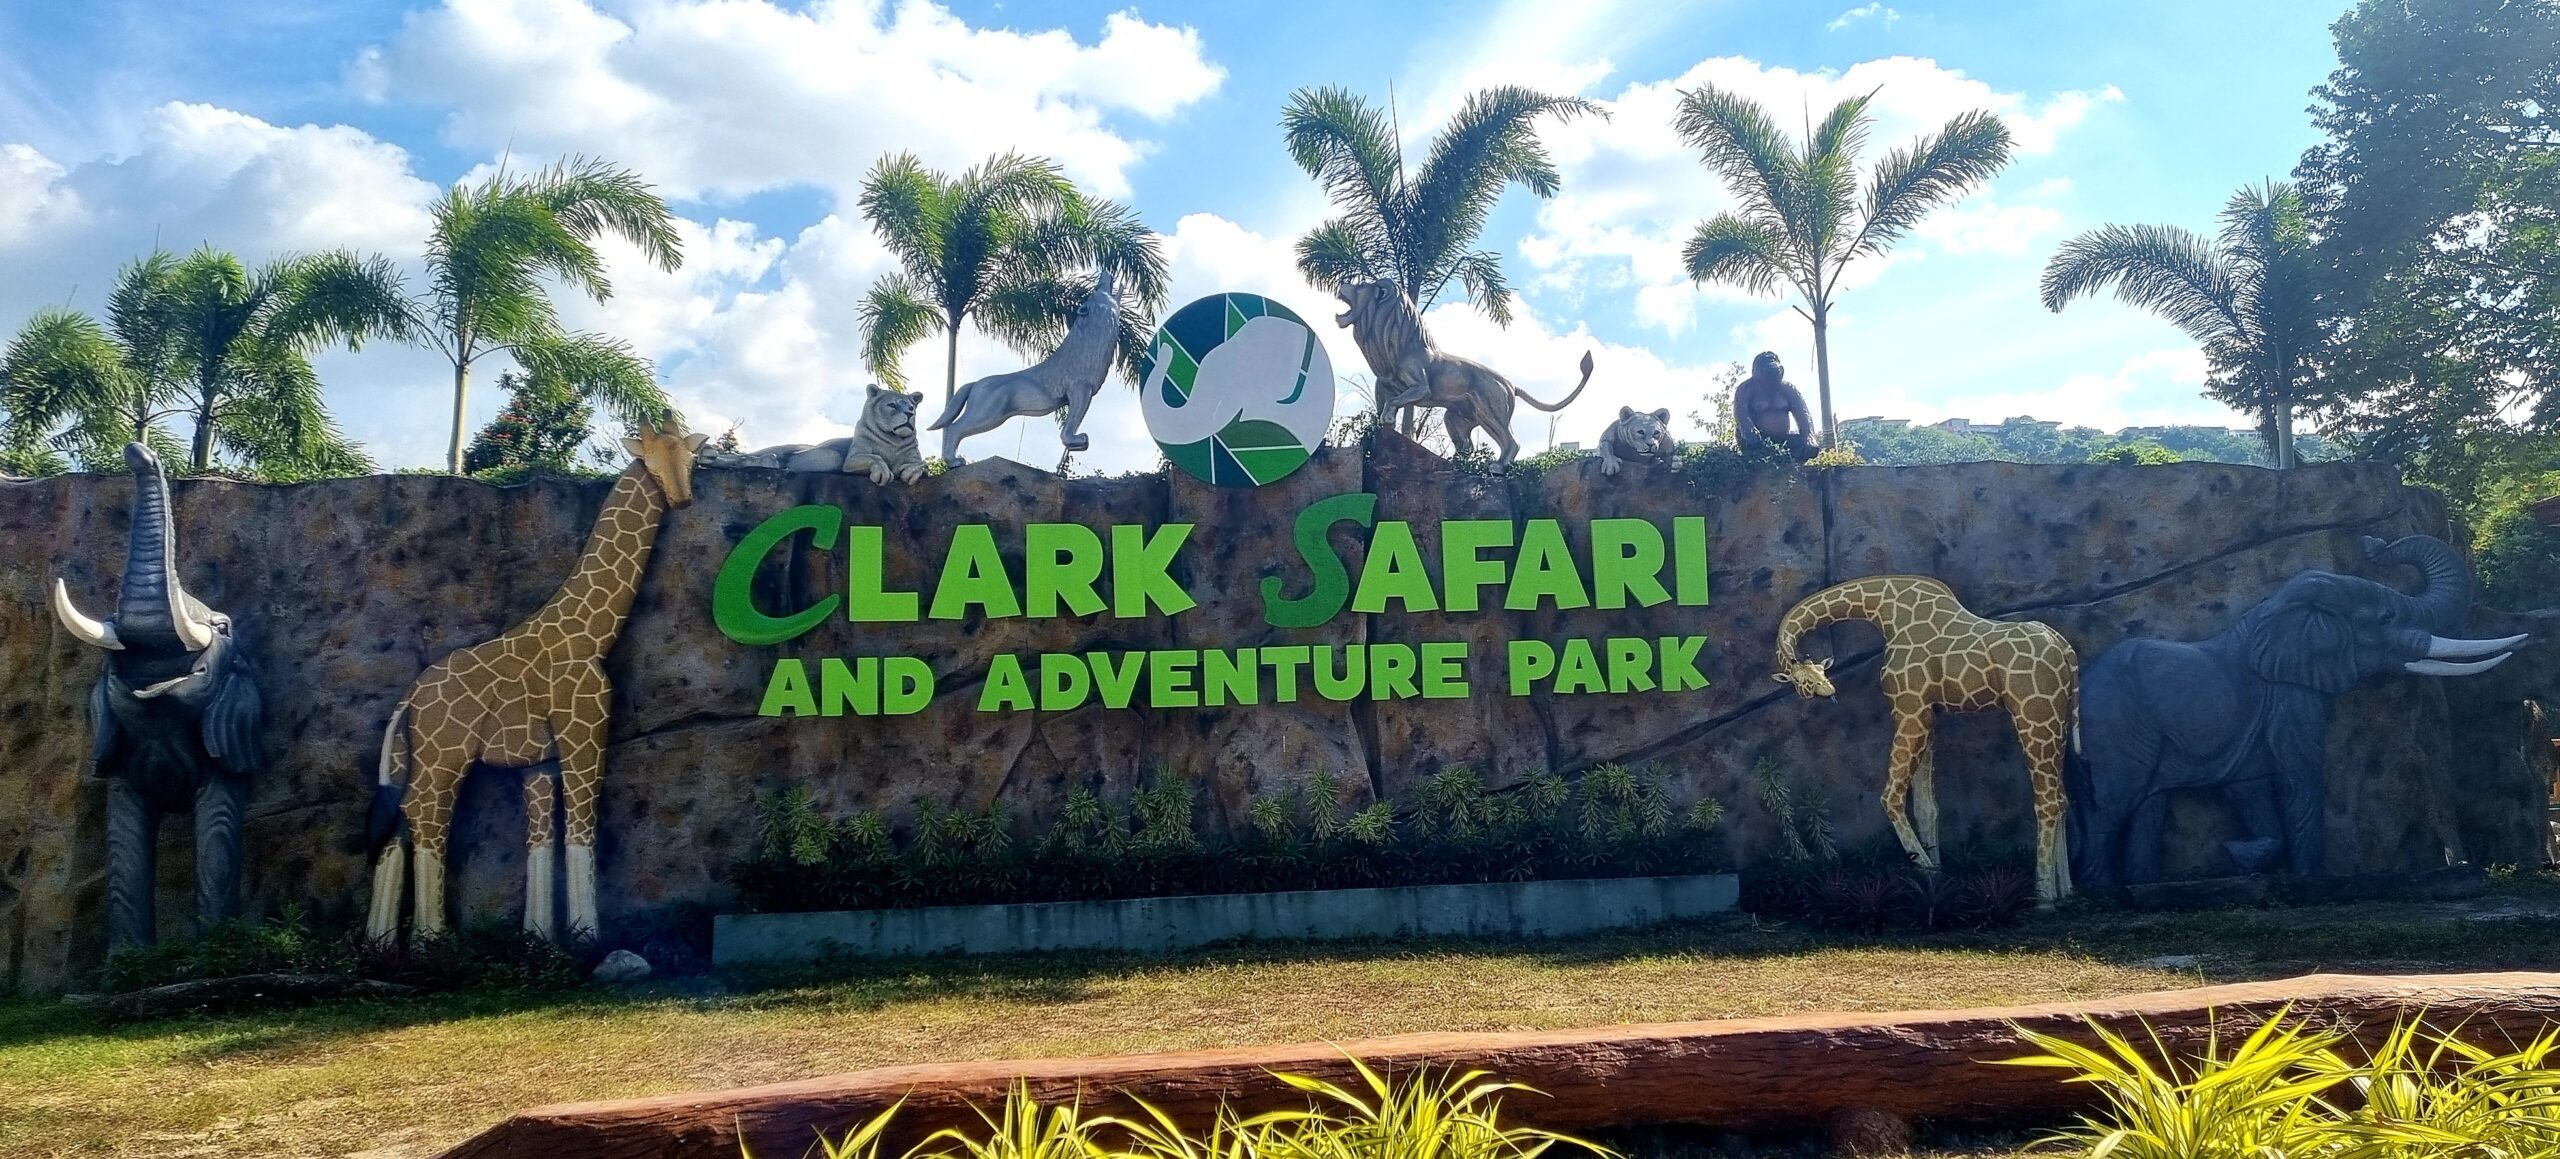 clark safari list of animals